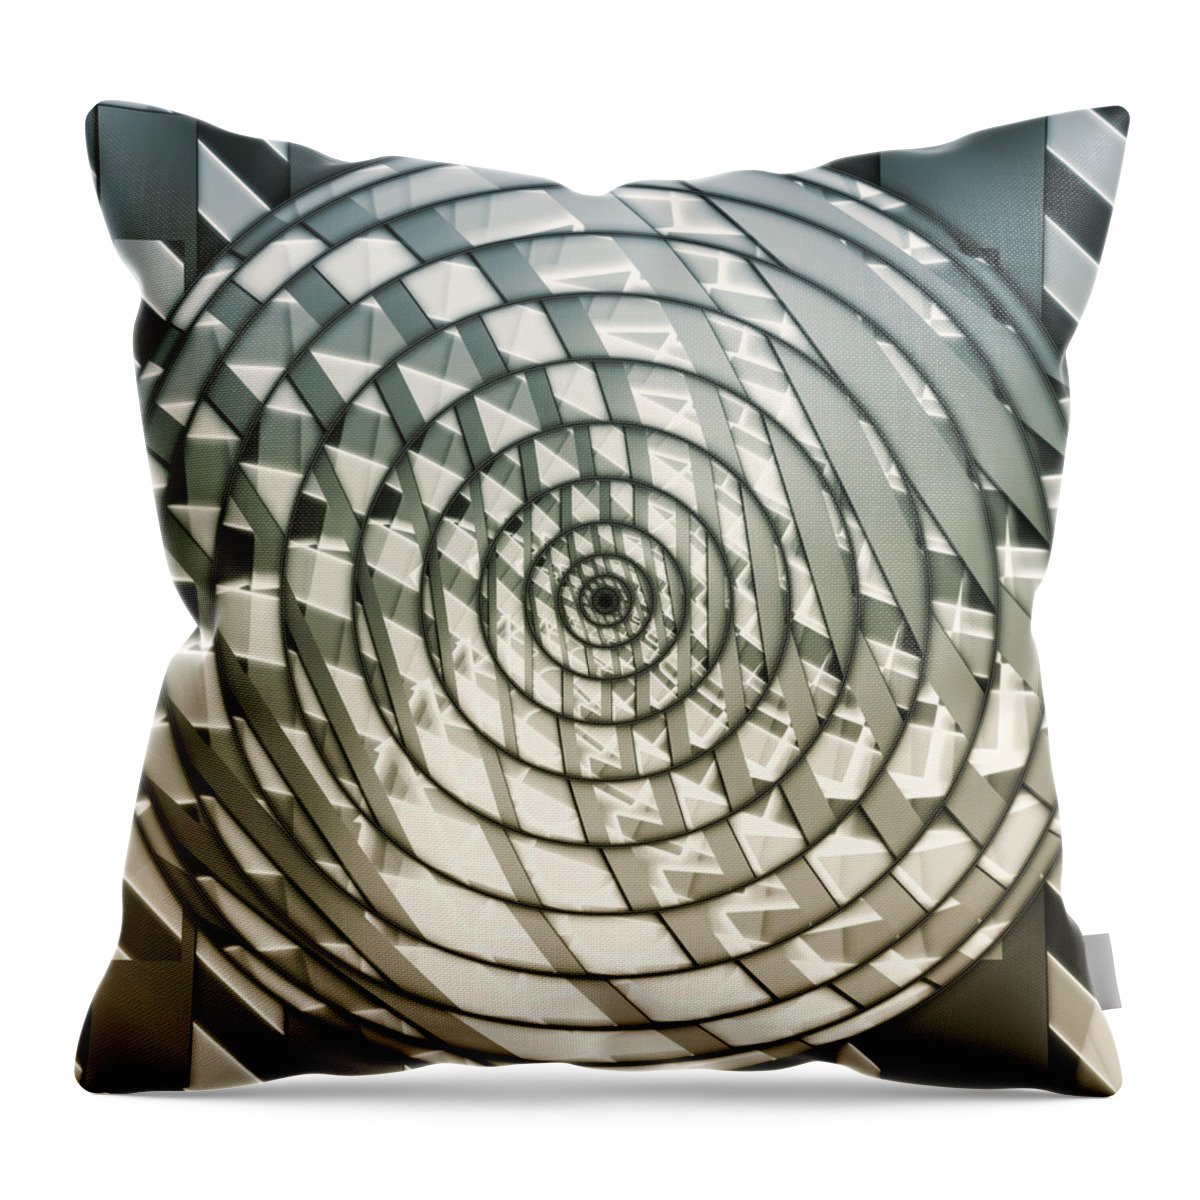 Abstract Throw Pillow featuring the digital art Art 21101801 by Marko Sabotin